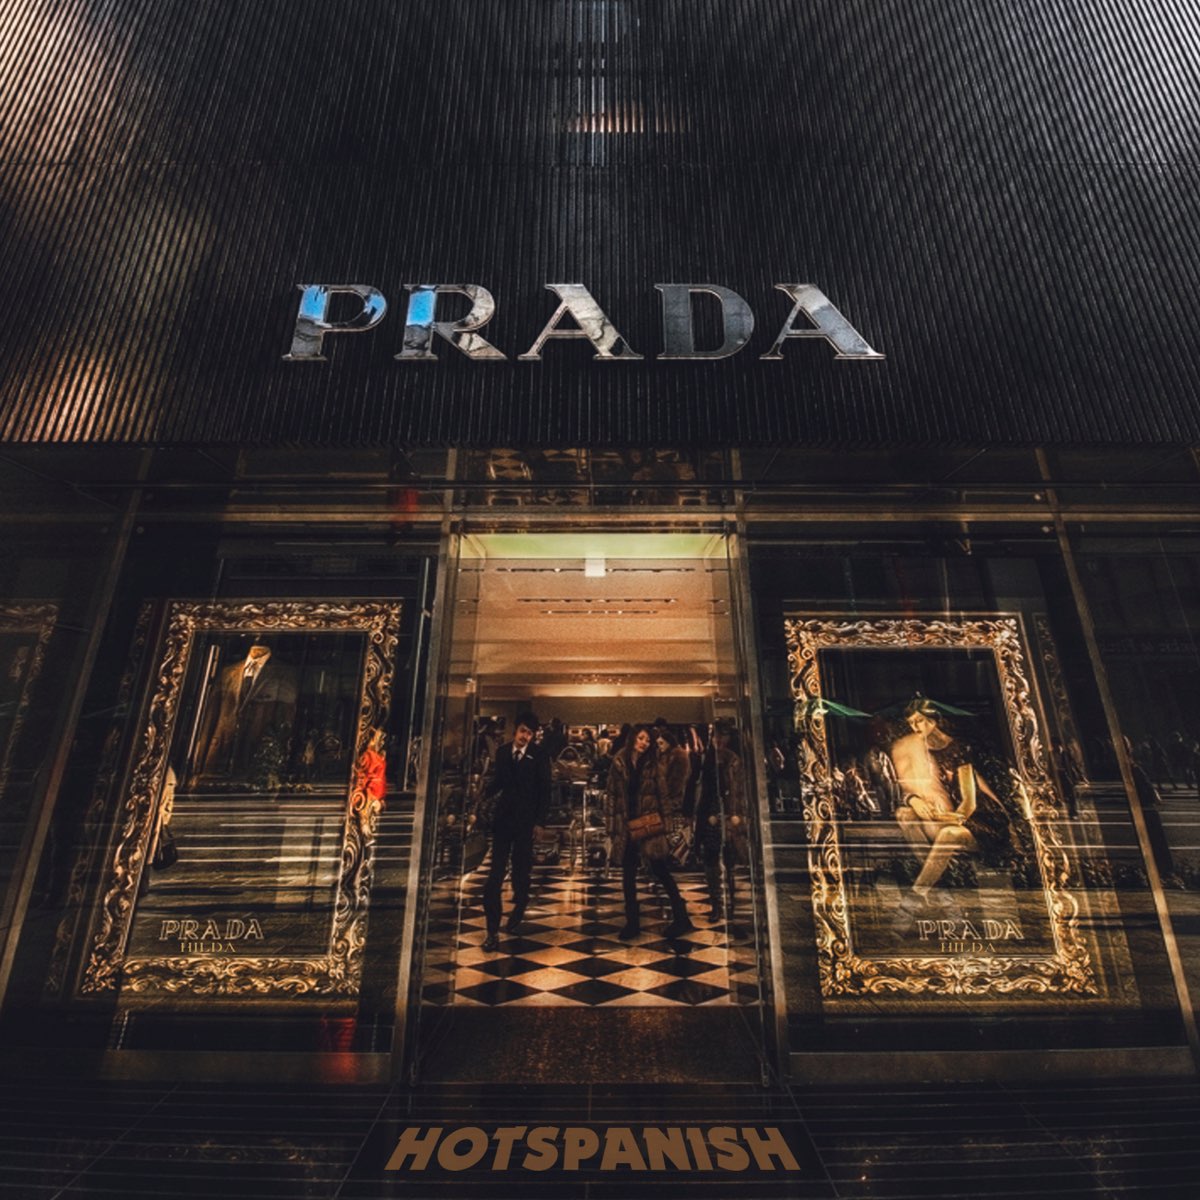 Prada - Single by HotSpanish on Apple Music